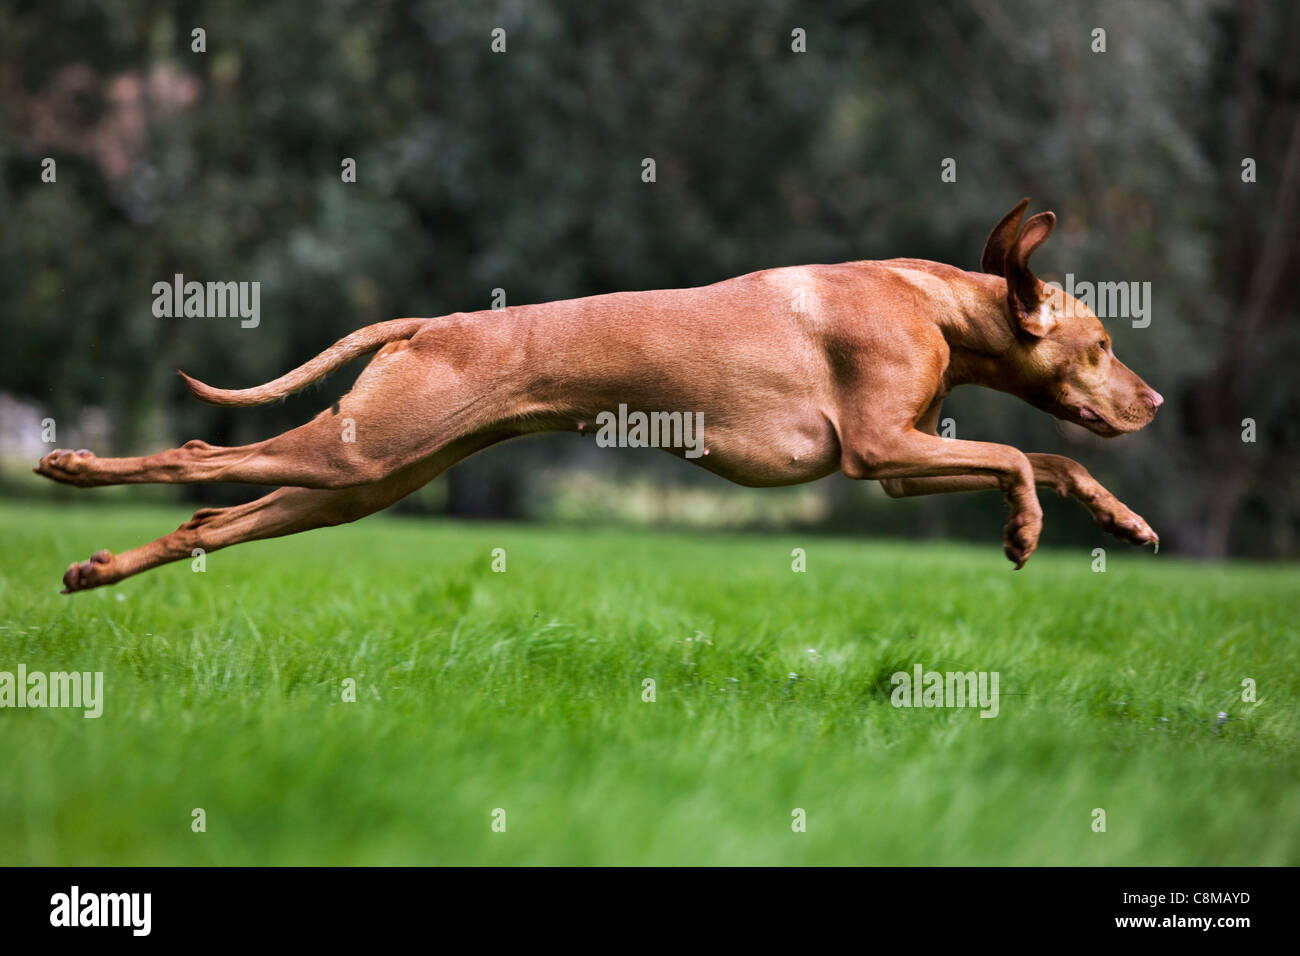 Hungarian Vizsla hunting dog with golden rust coat (Canis lupus familiaris) running in field, Belgium Stock Photo